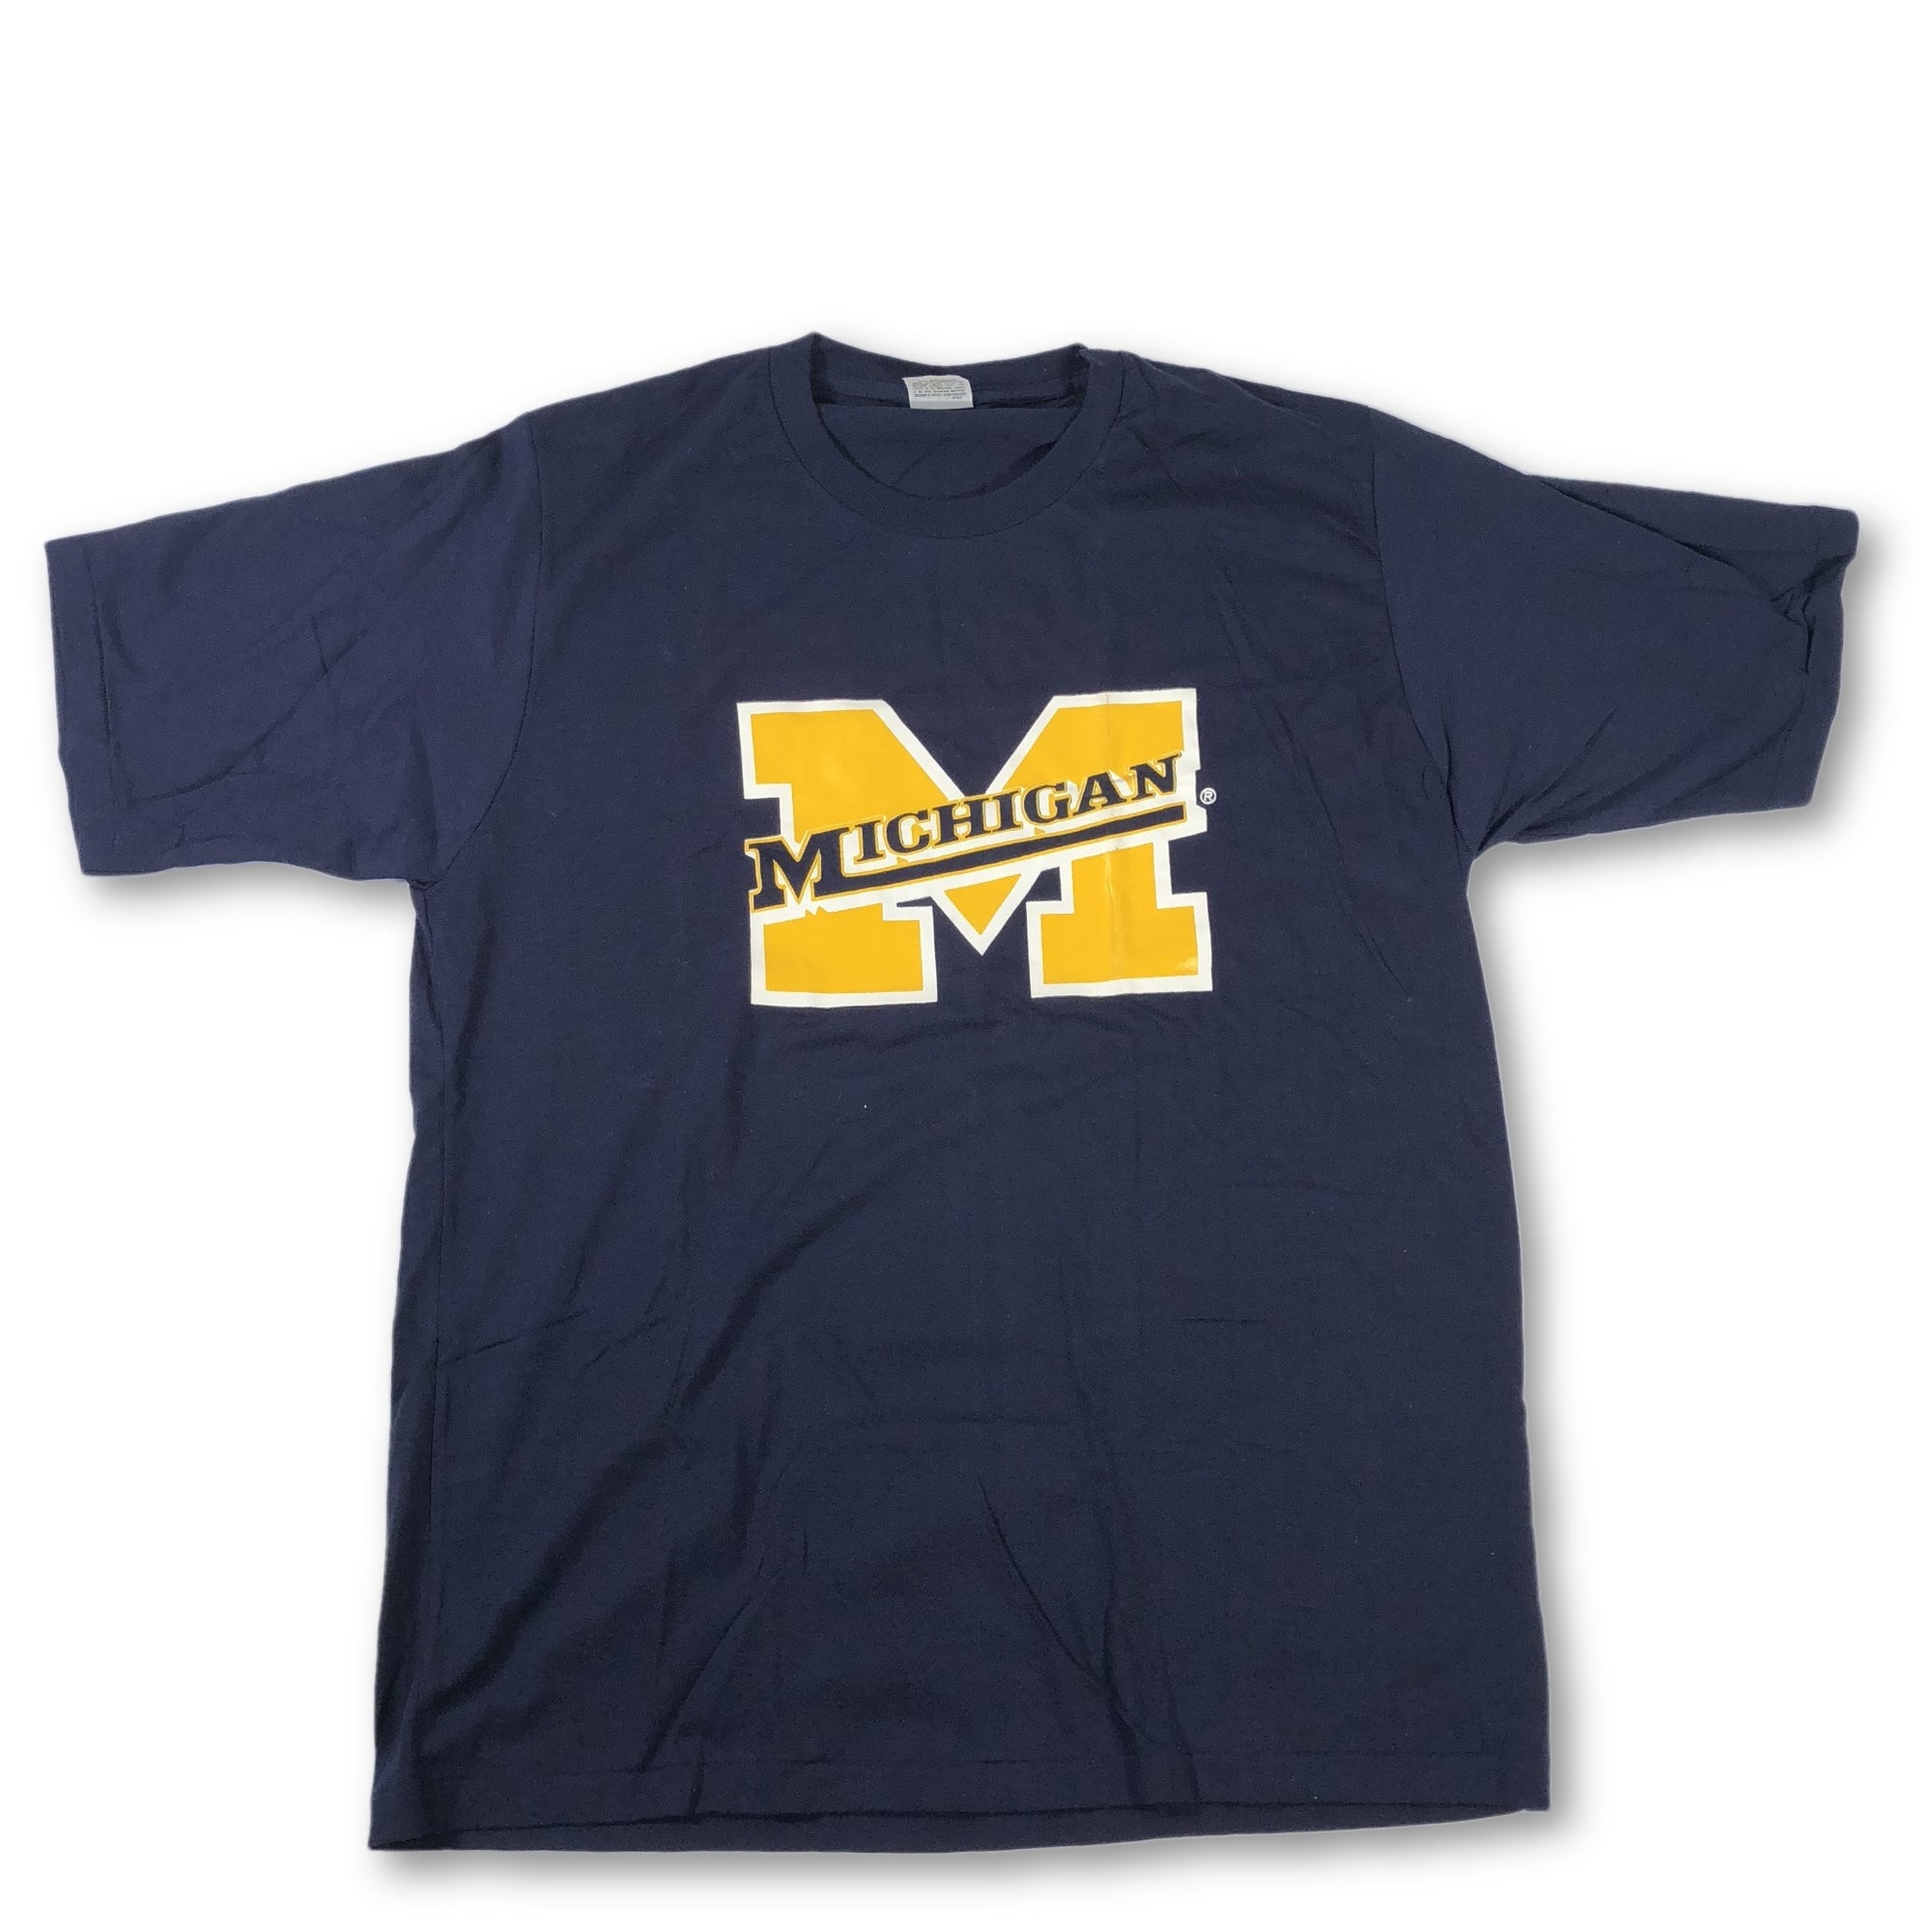 Vintage Michigan "Logo" T-Shirt - jointcustodydc